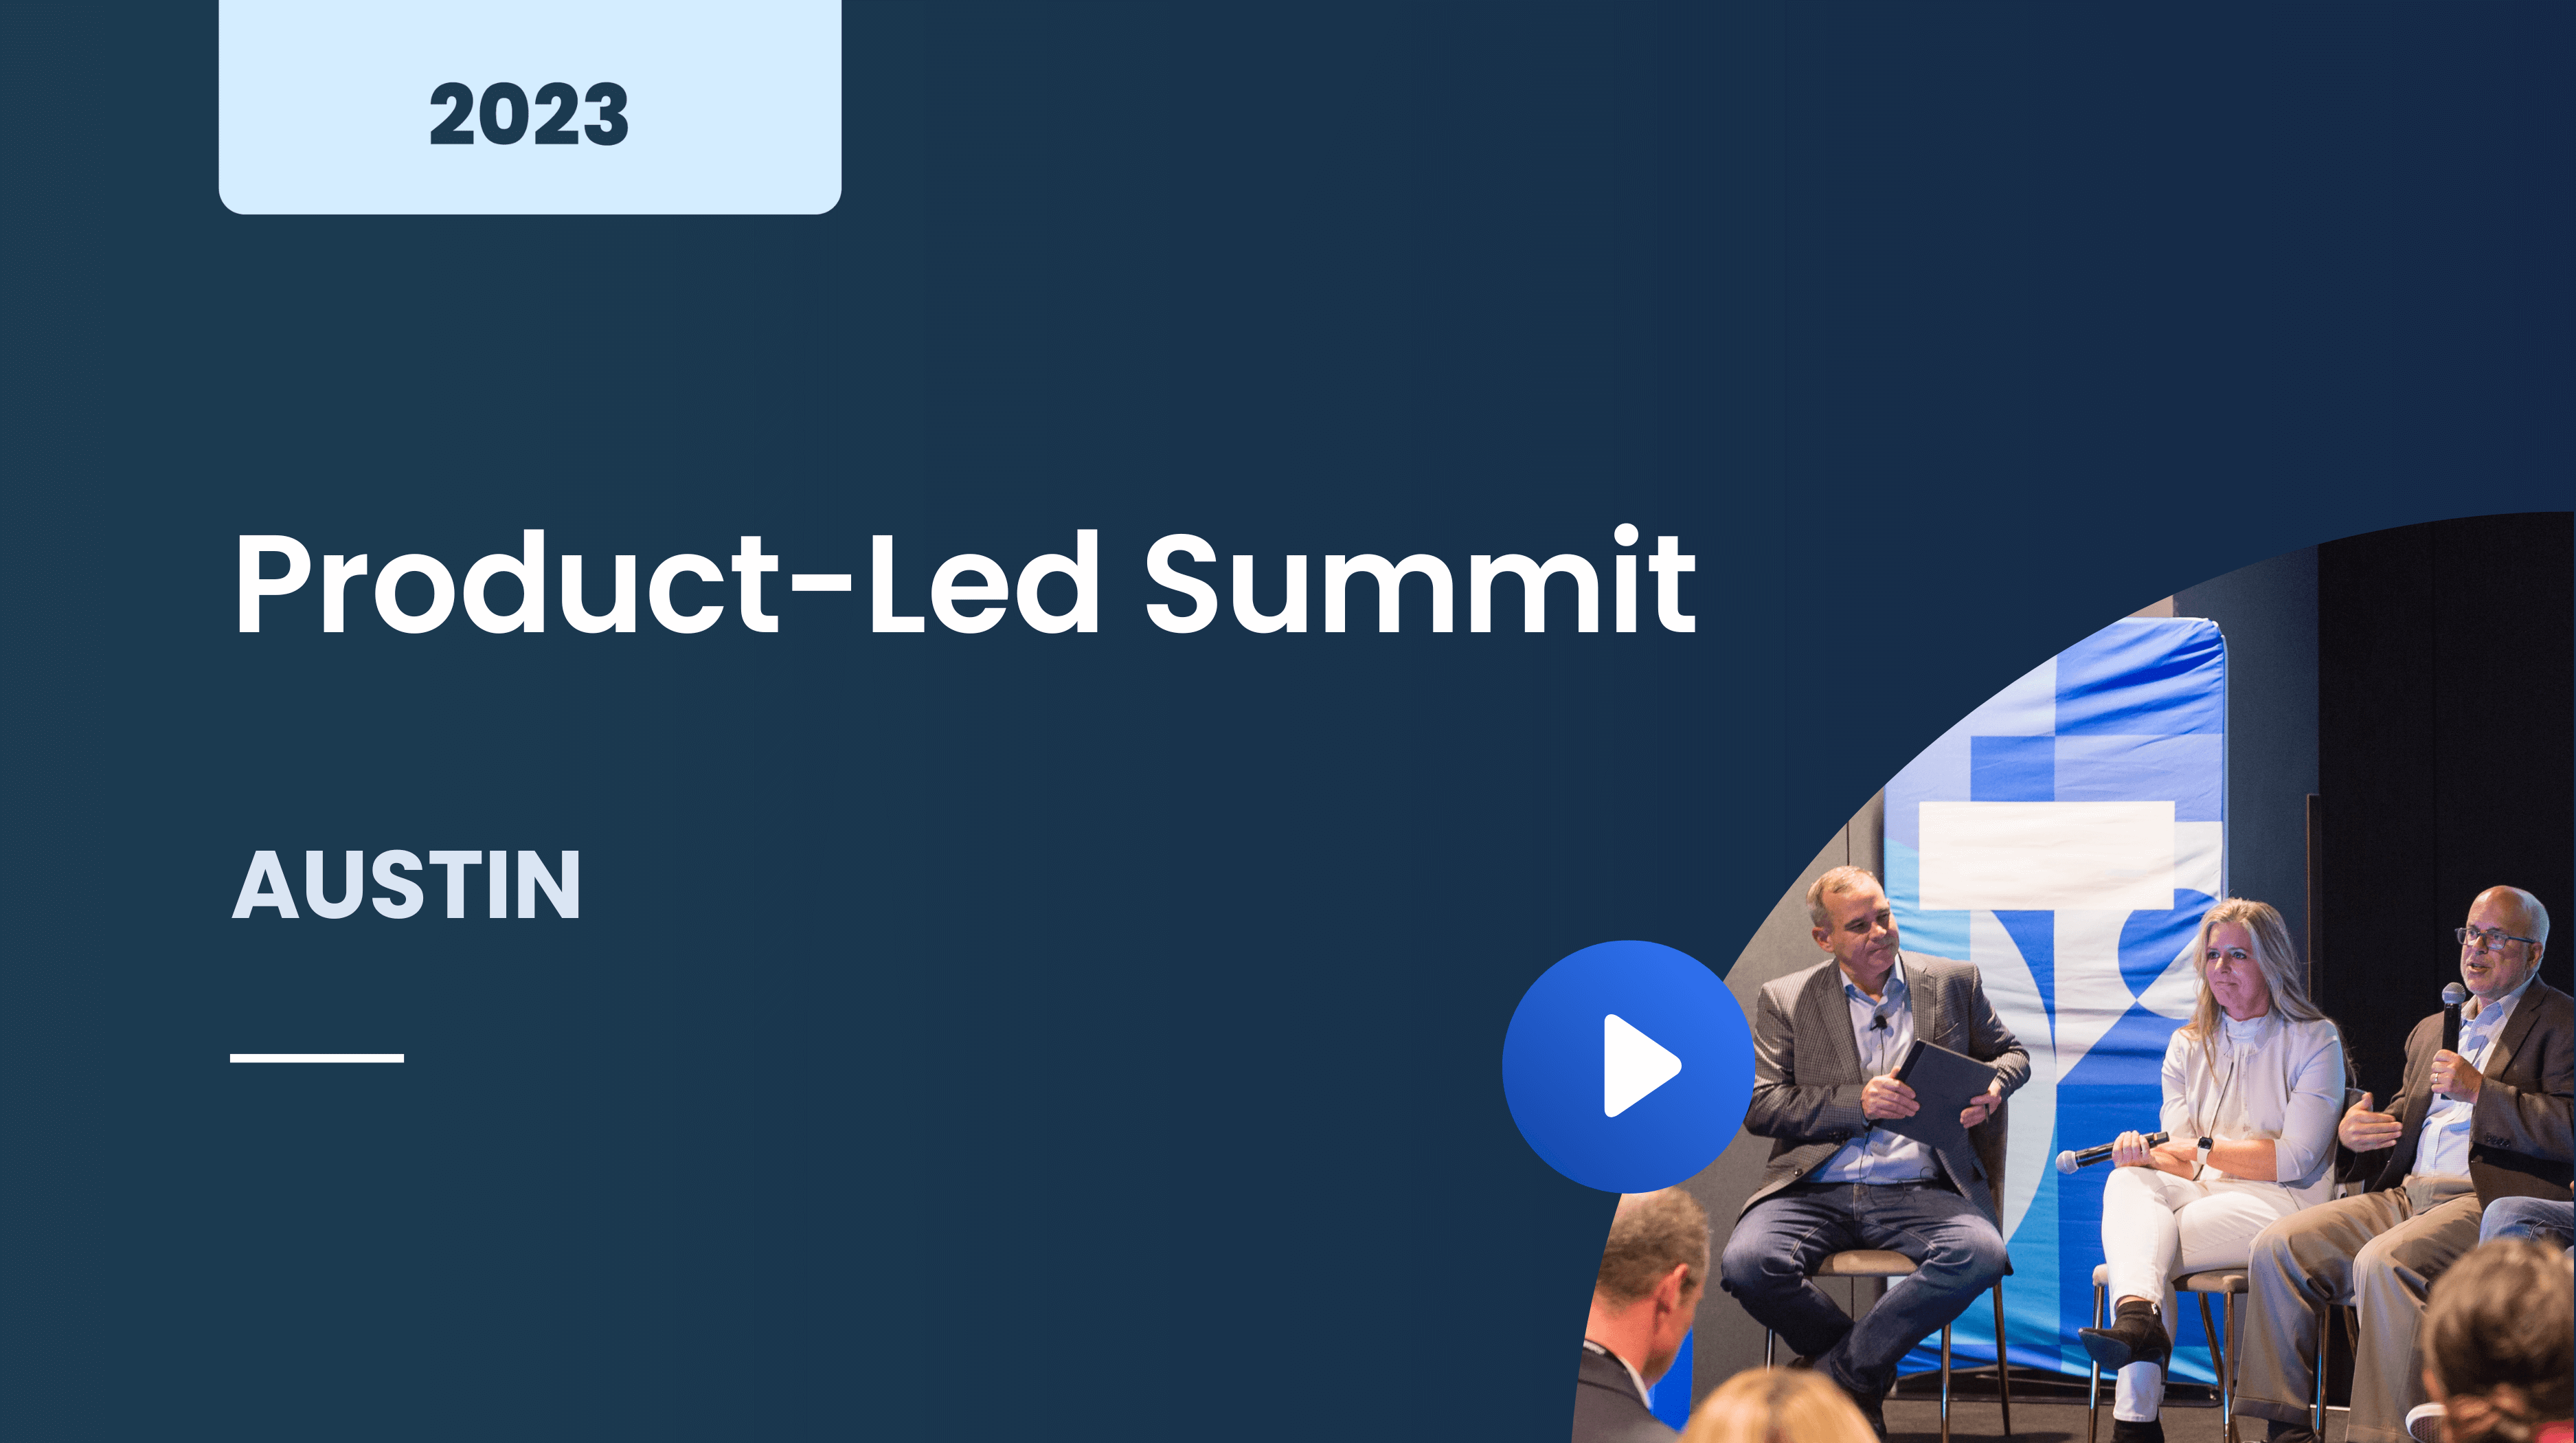 Product-Led Summit Austin 2023